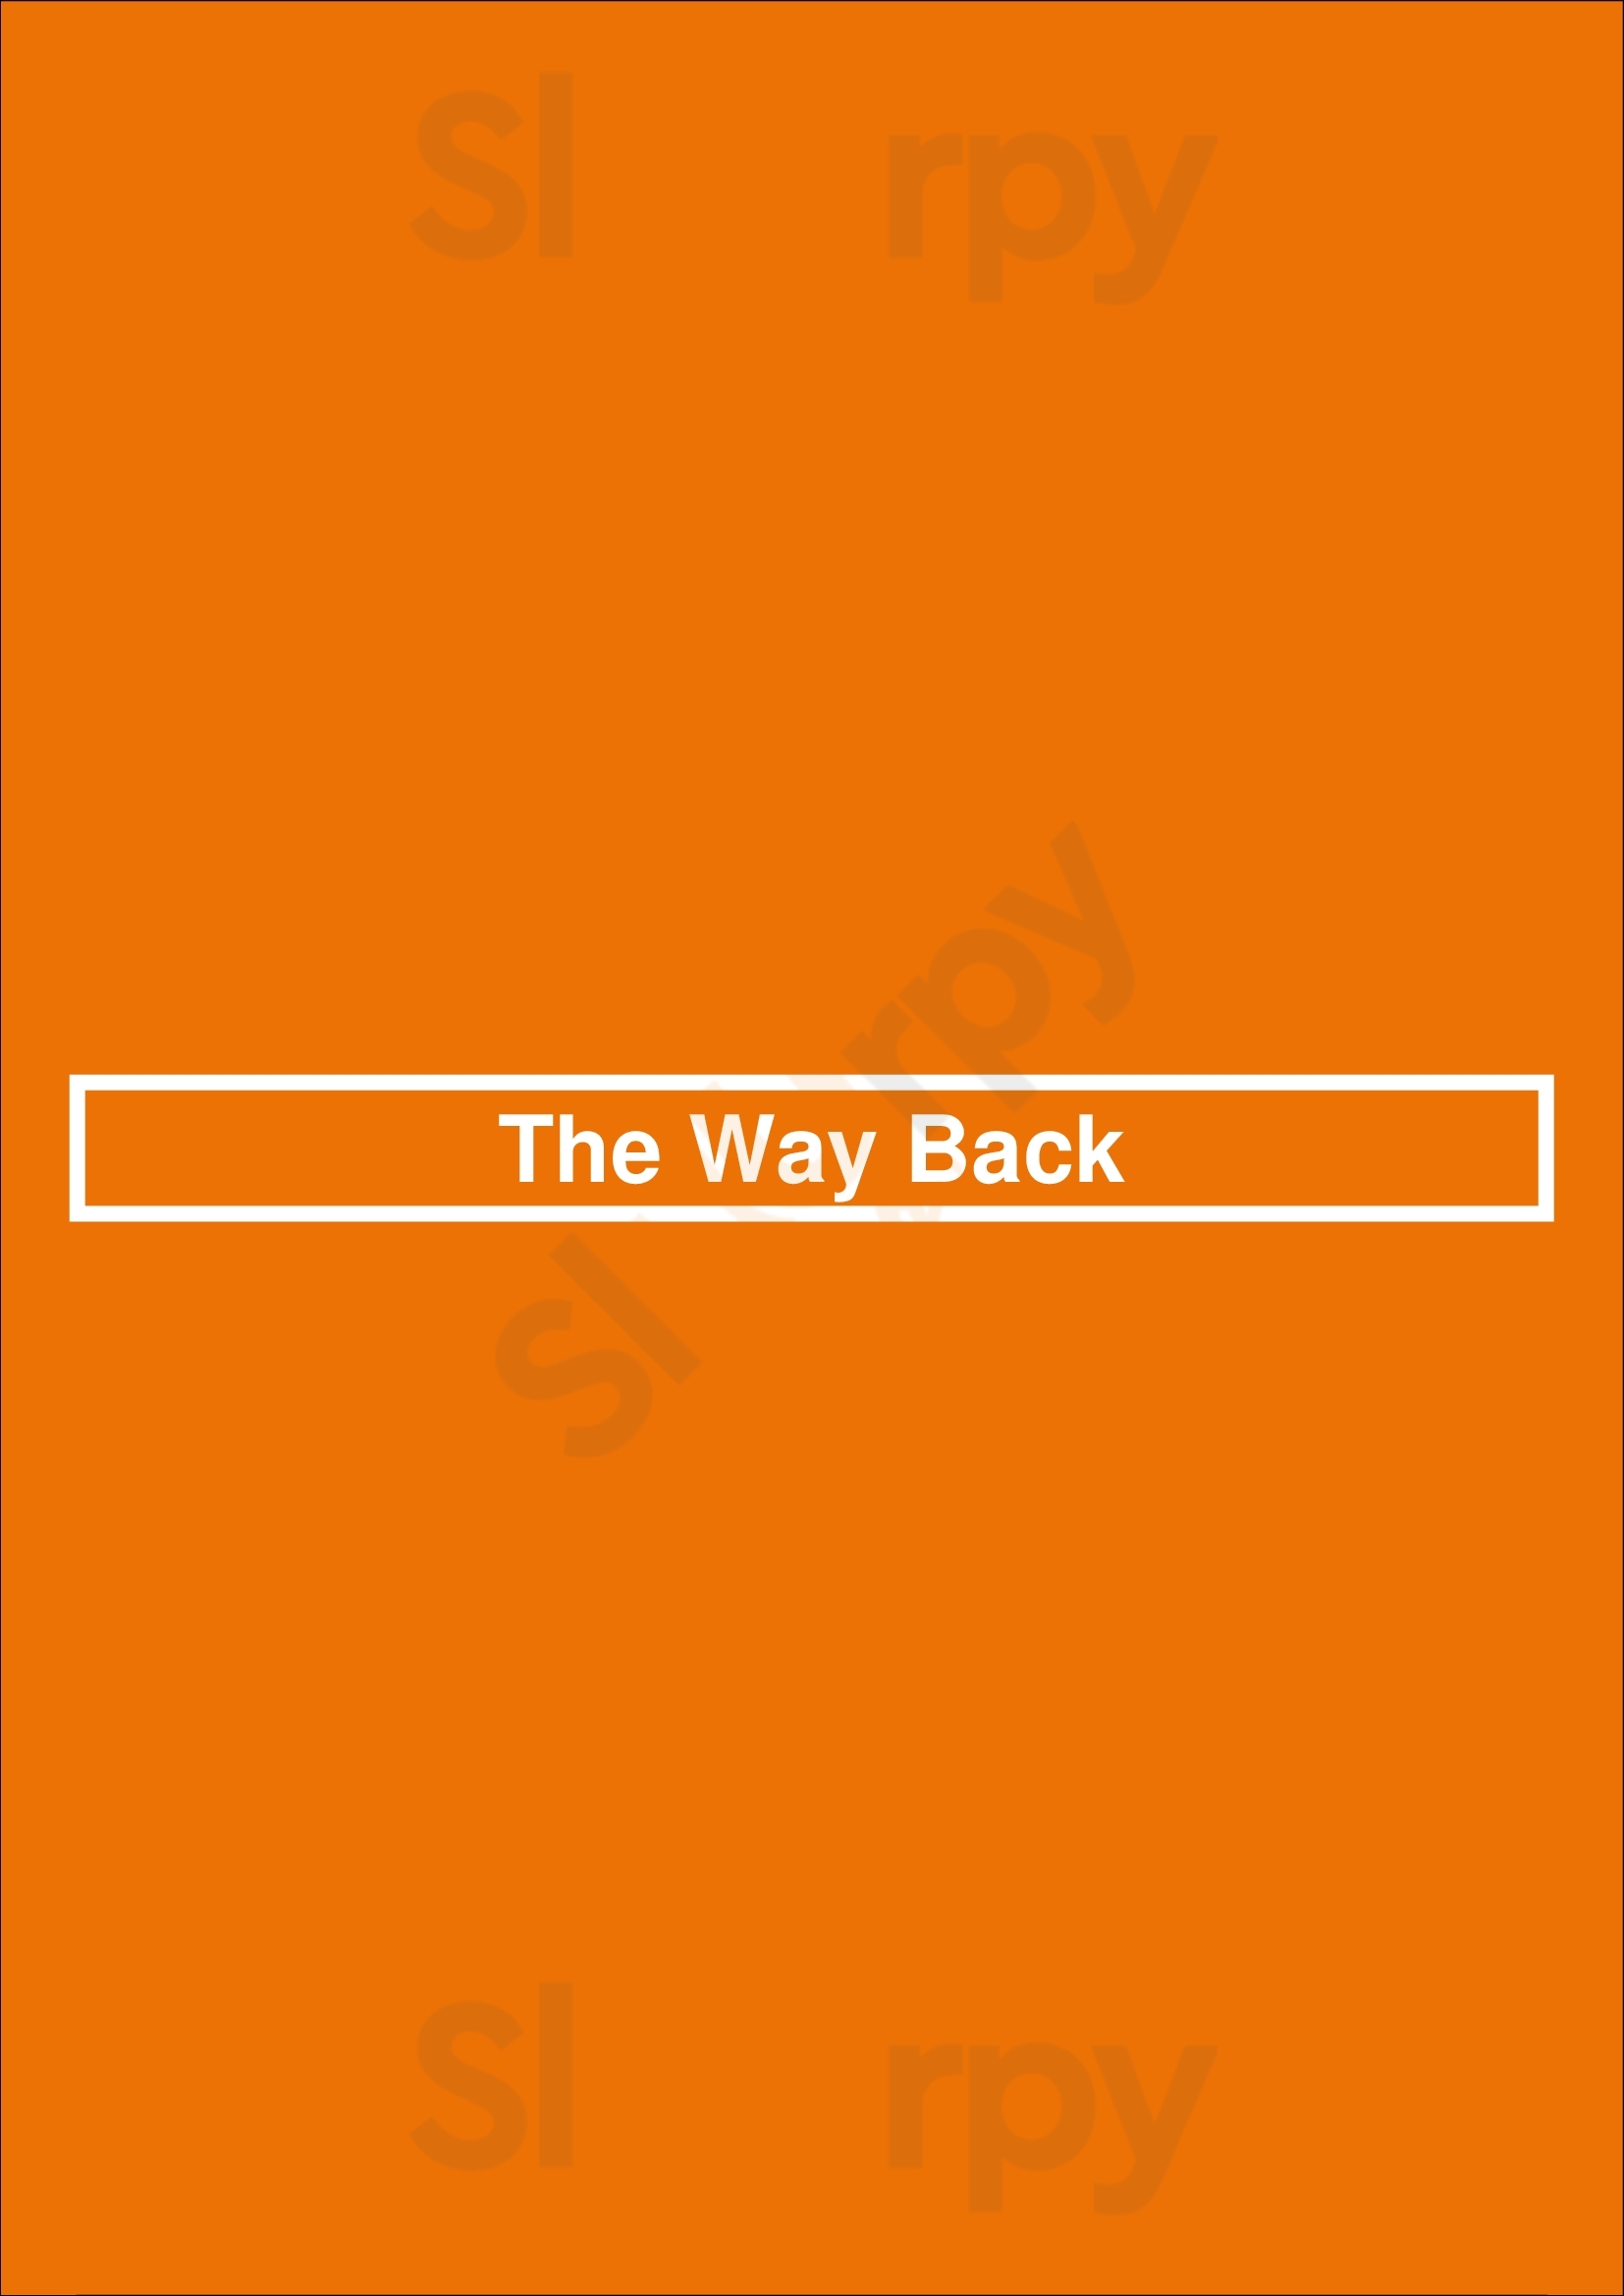 The Way Back Denver Menu - 1